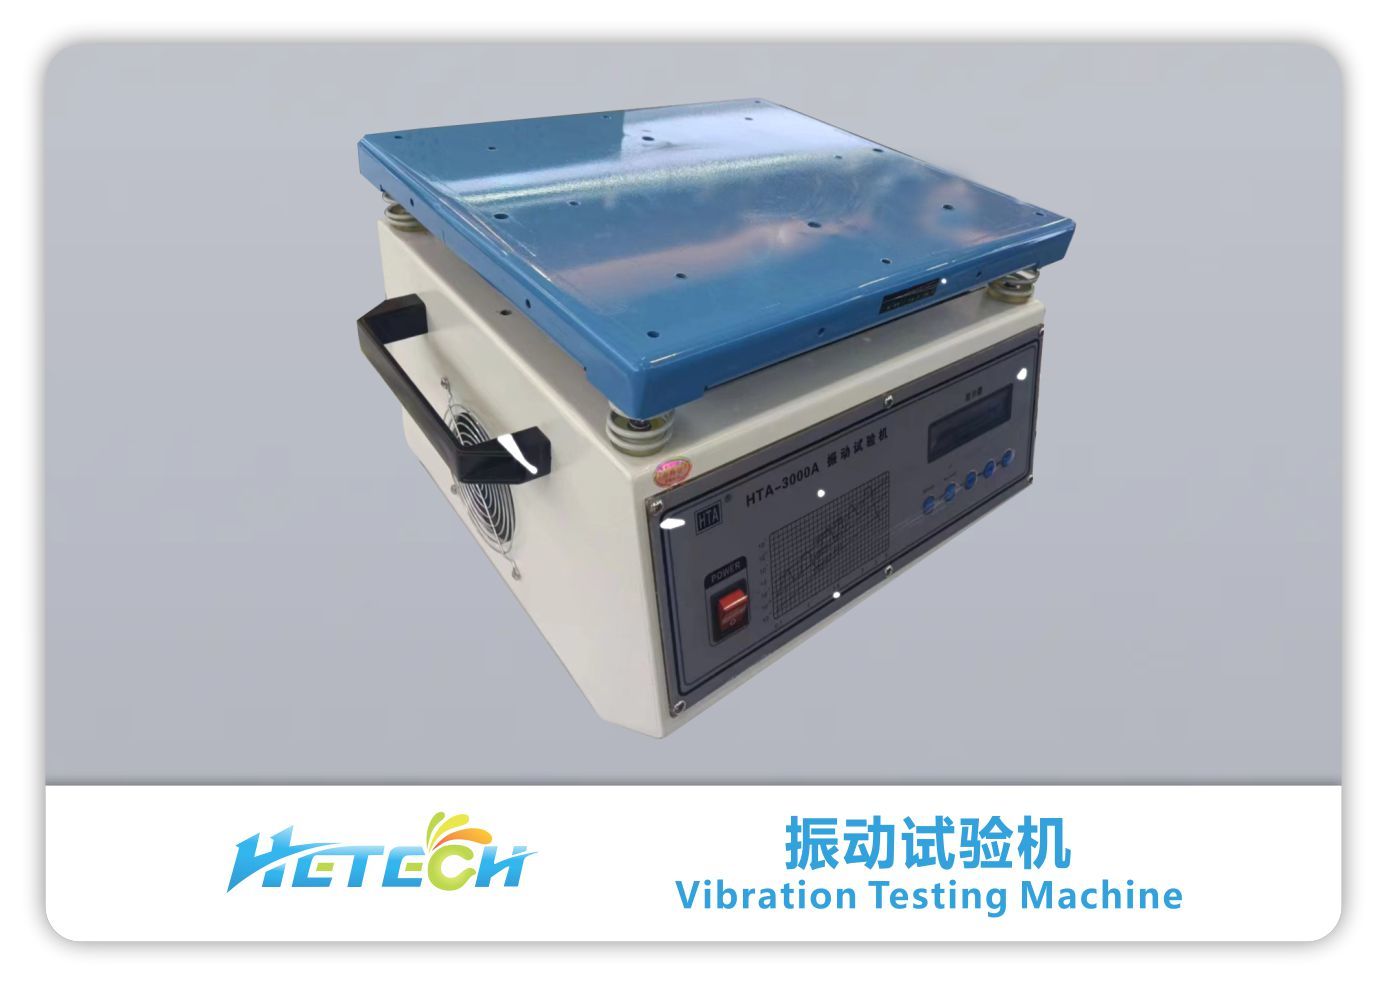 Vibration Testing Machine